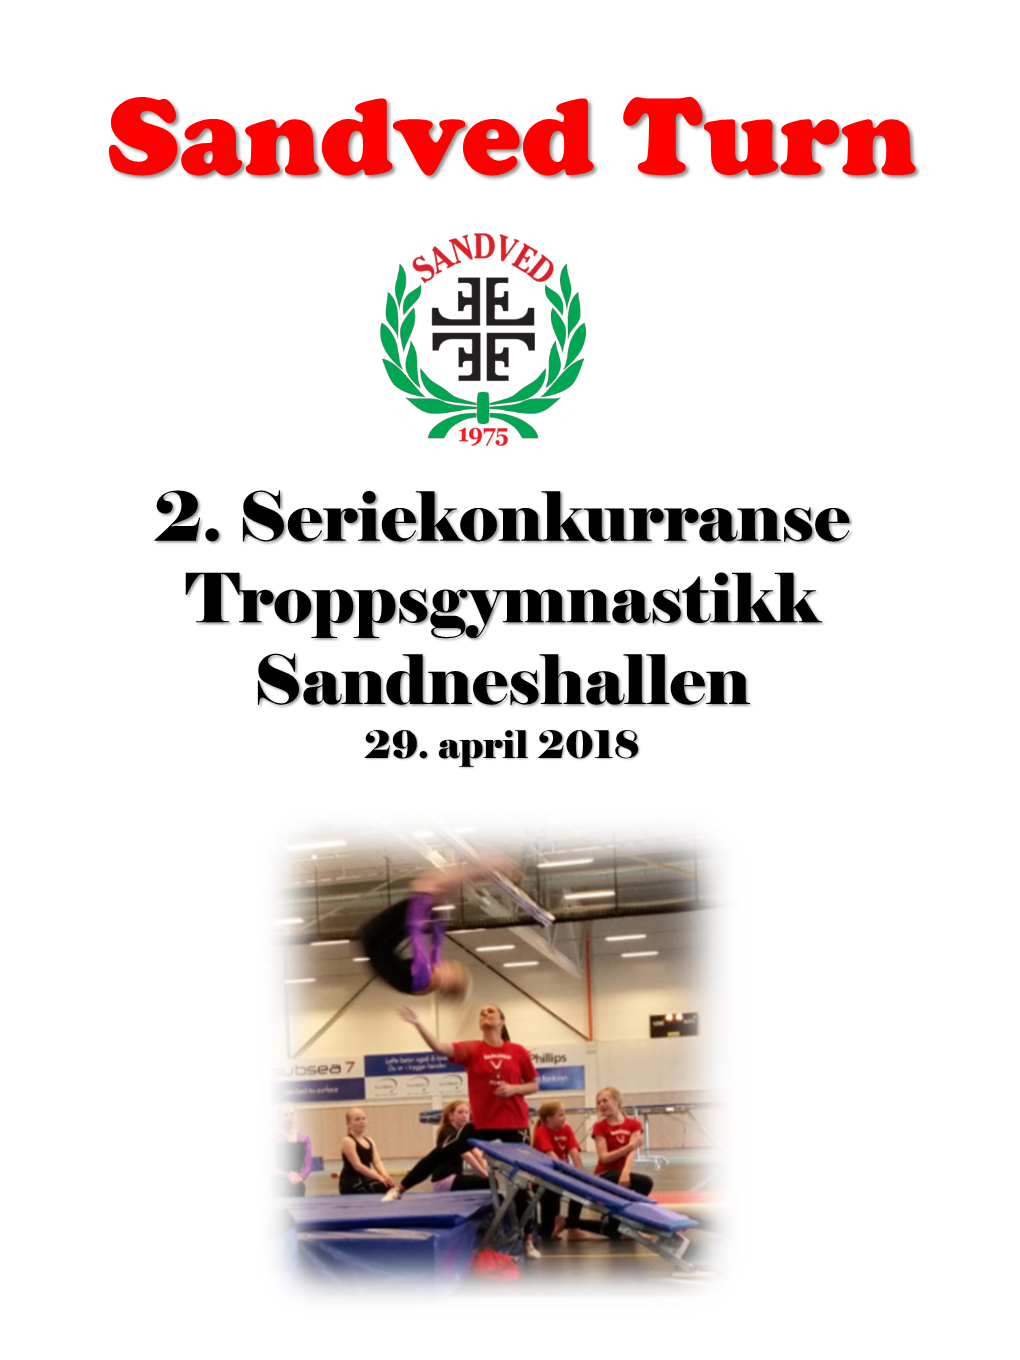 2. Seriekonkurranse Troppsgymnastikk Sandneshallen 29